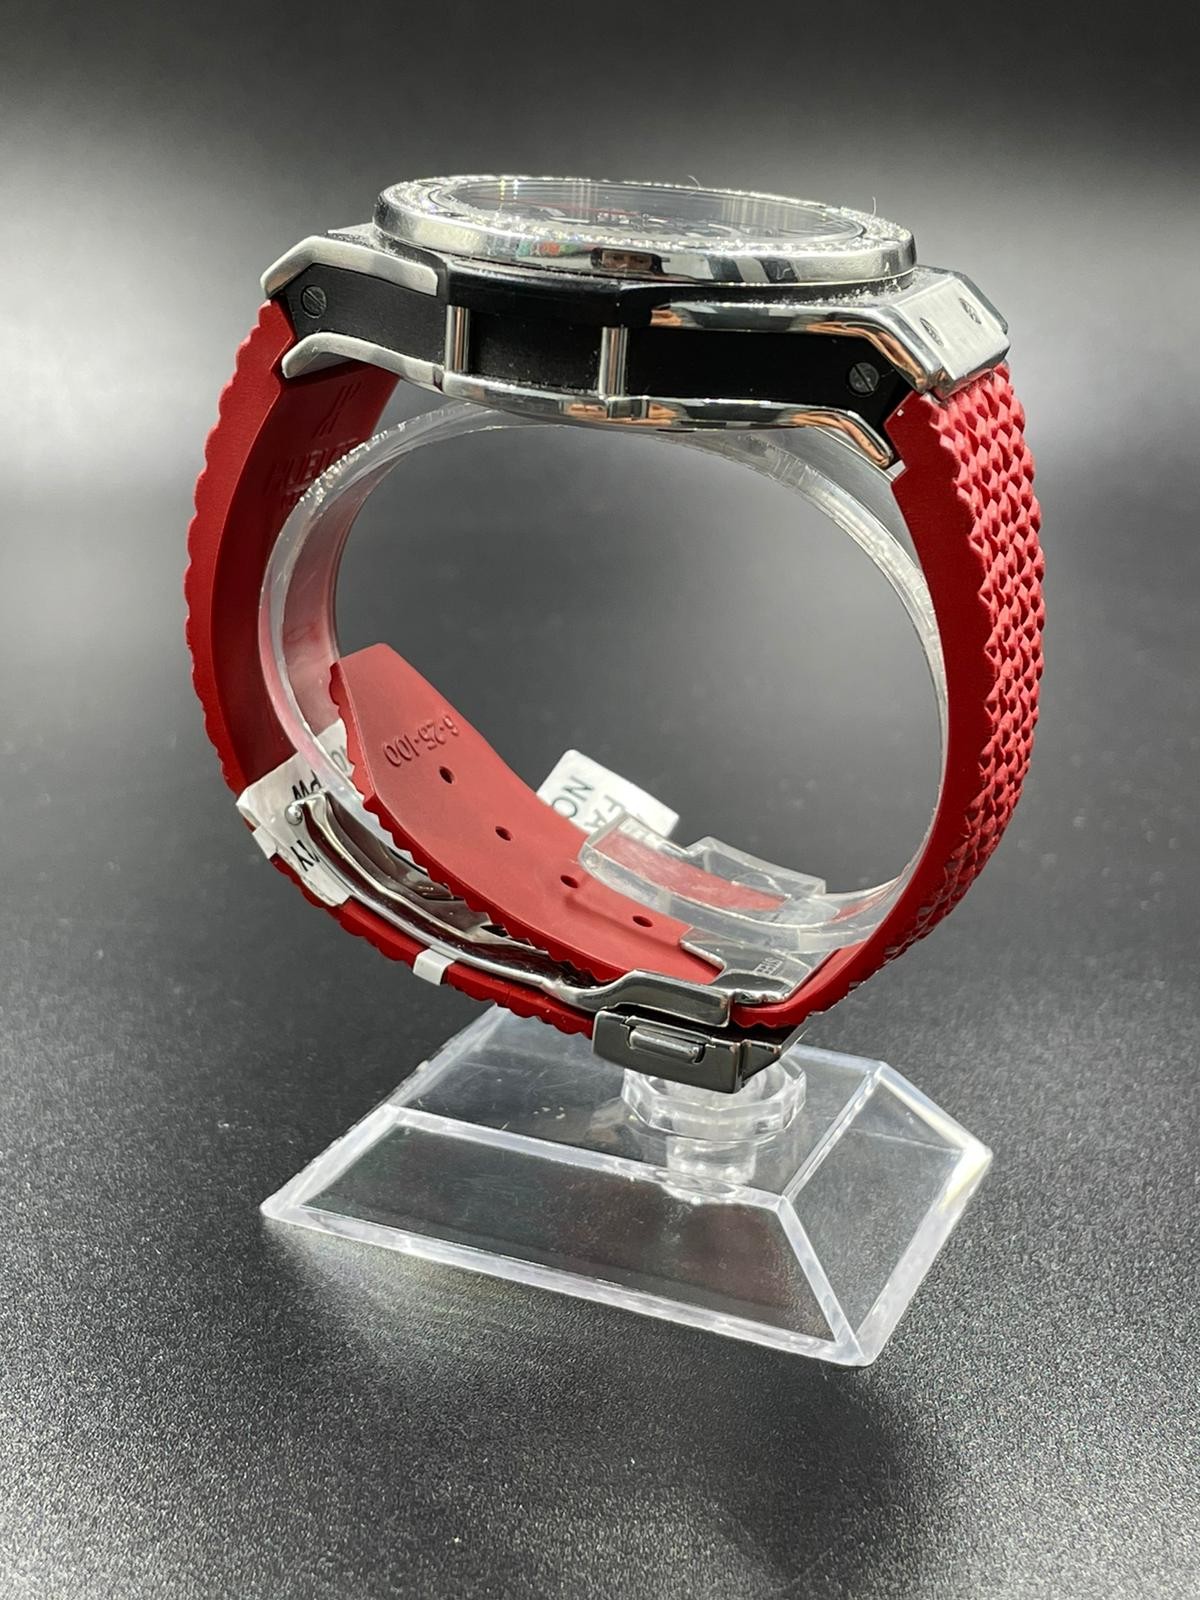 Hublot Big Bang chronometer watch with black face and original diamond dial - Image 4 of 5